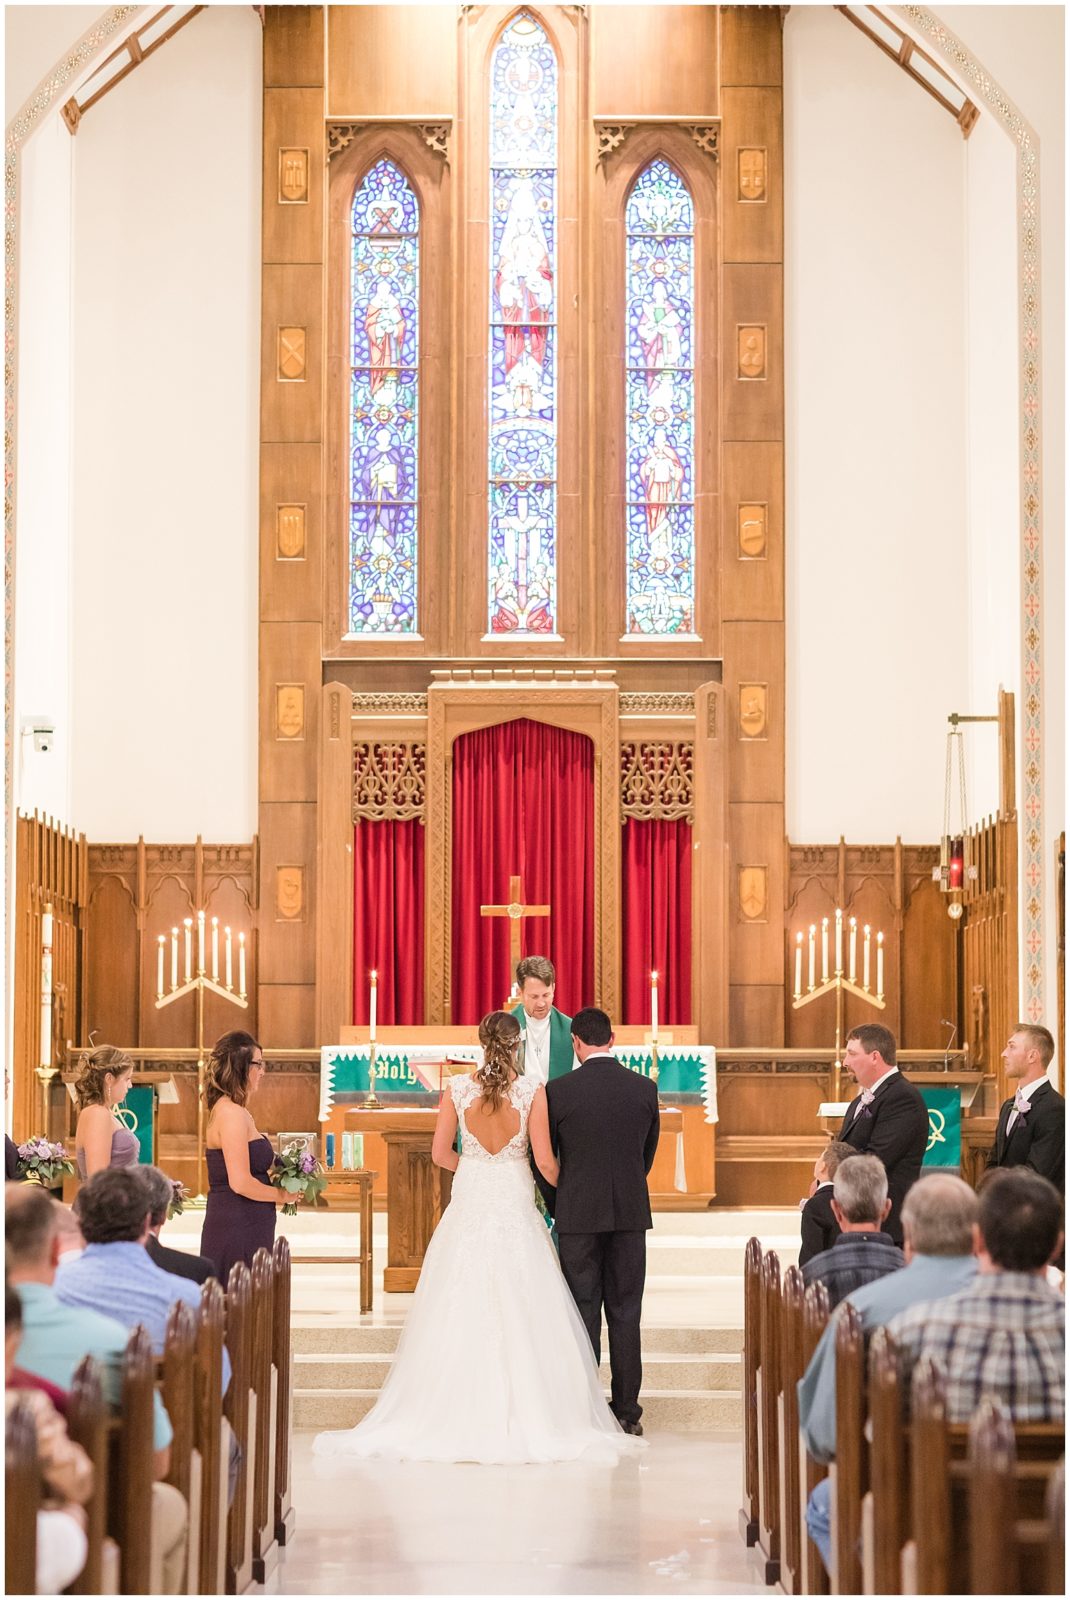 Ceremony | Wedding in Orange City, Iowa shot by Jessica Brees Photo & Video